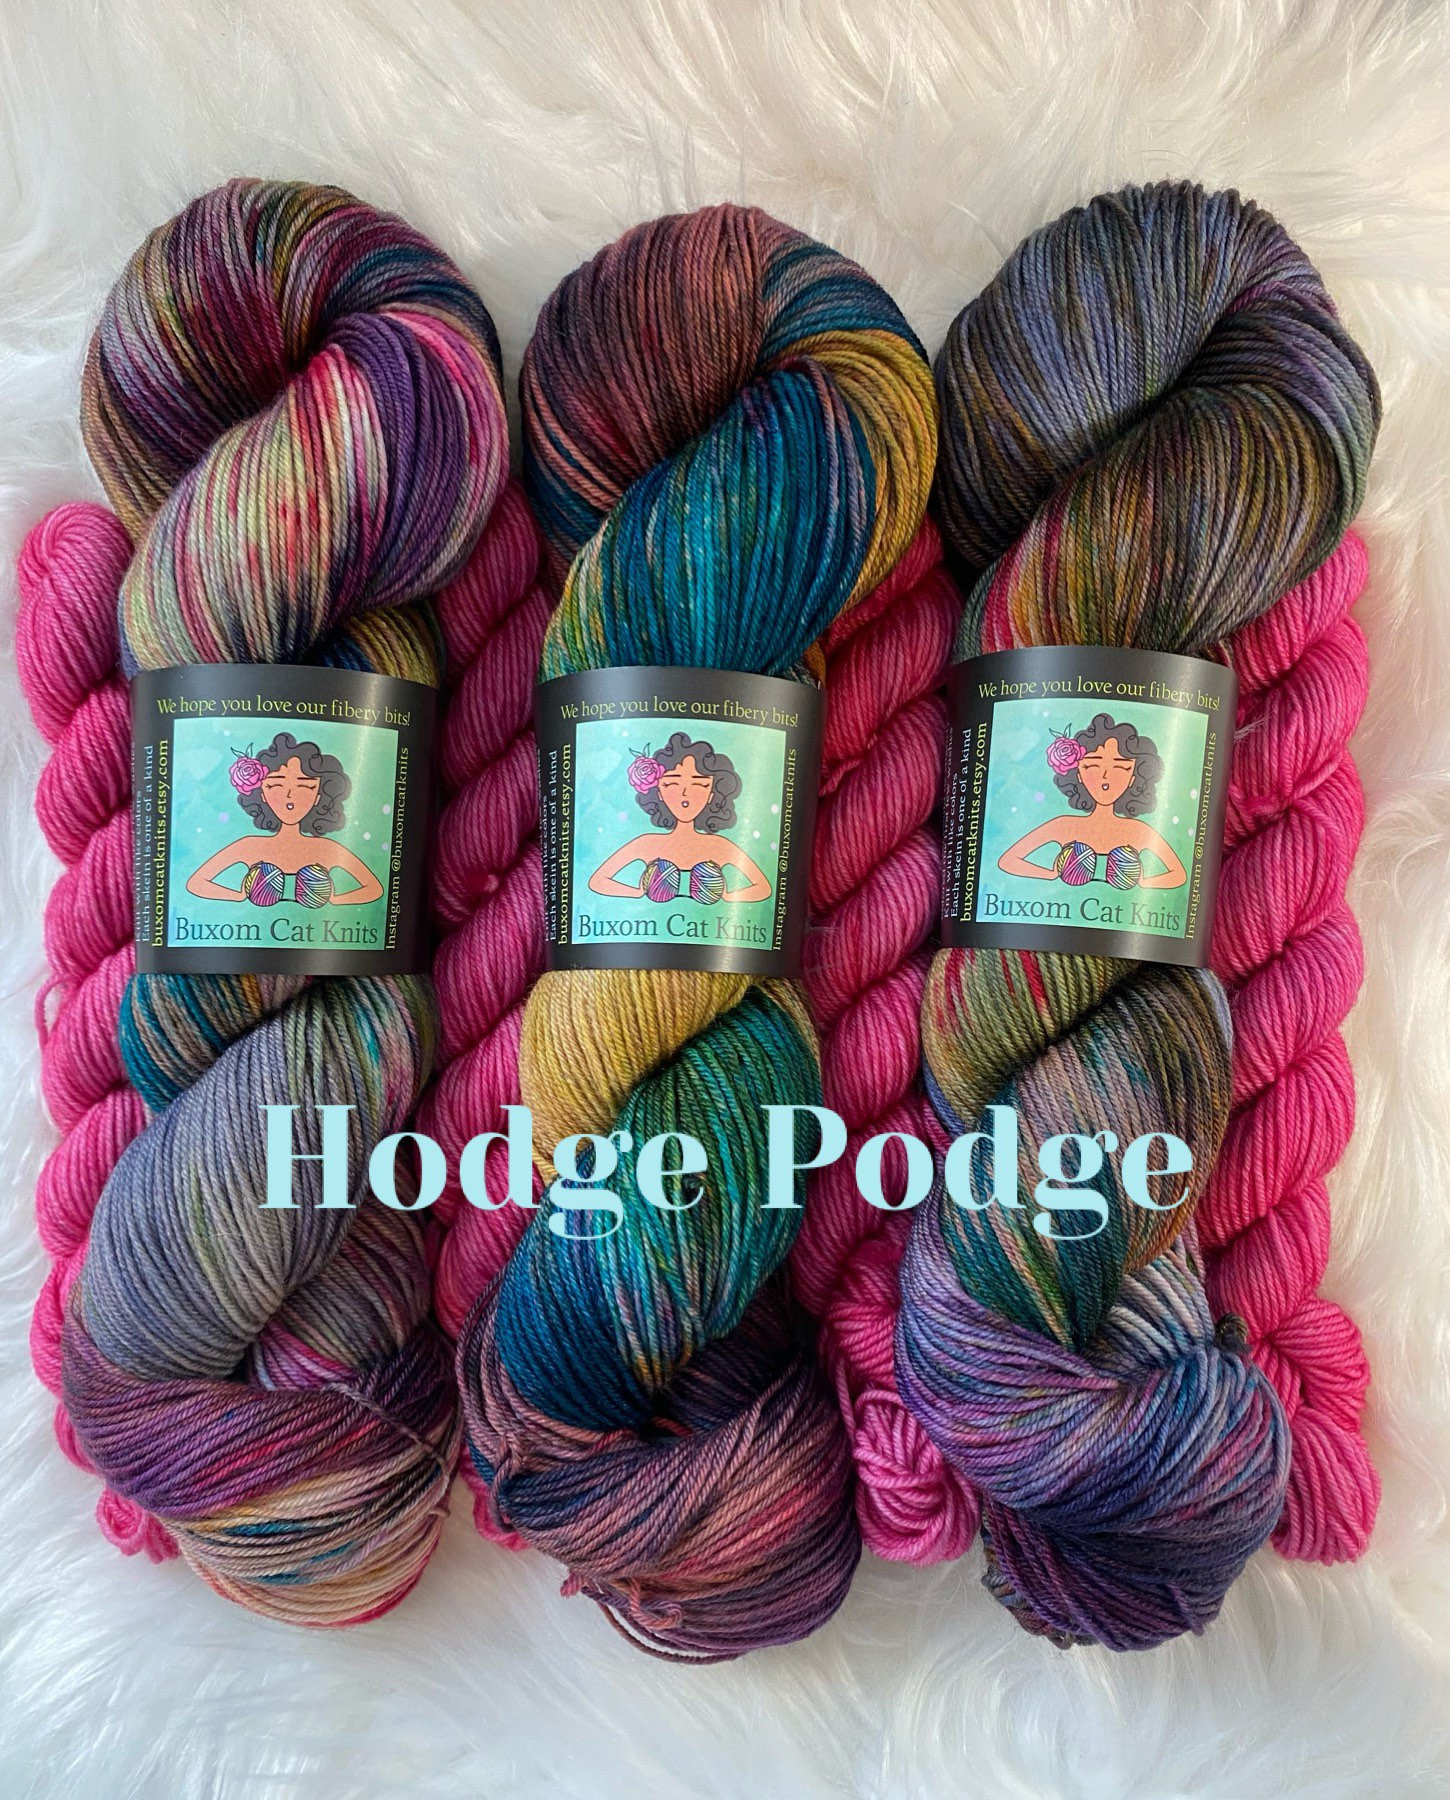 Hodge Podge Yarn